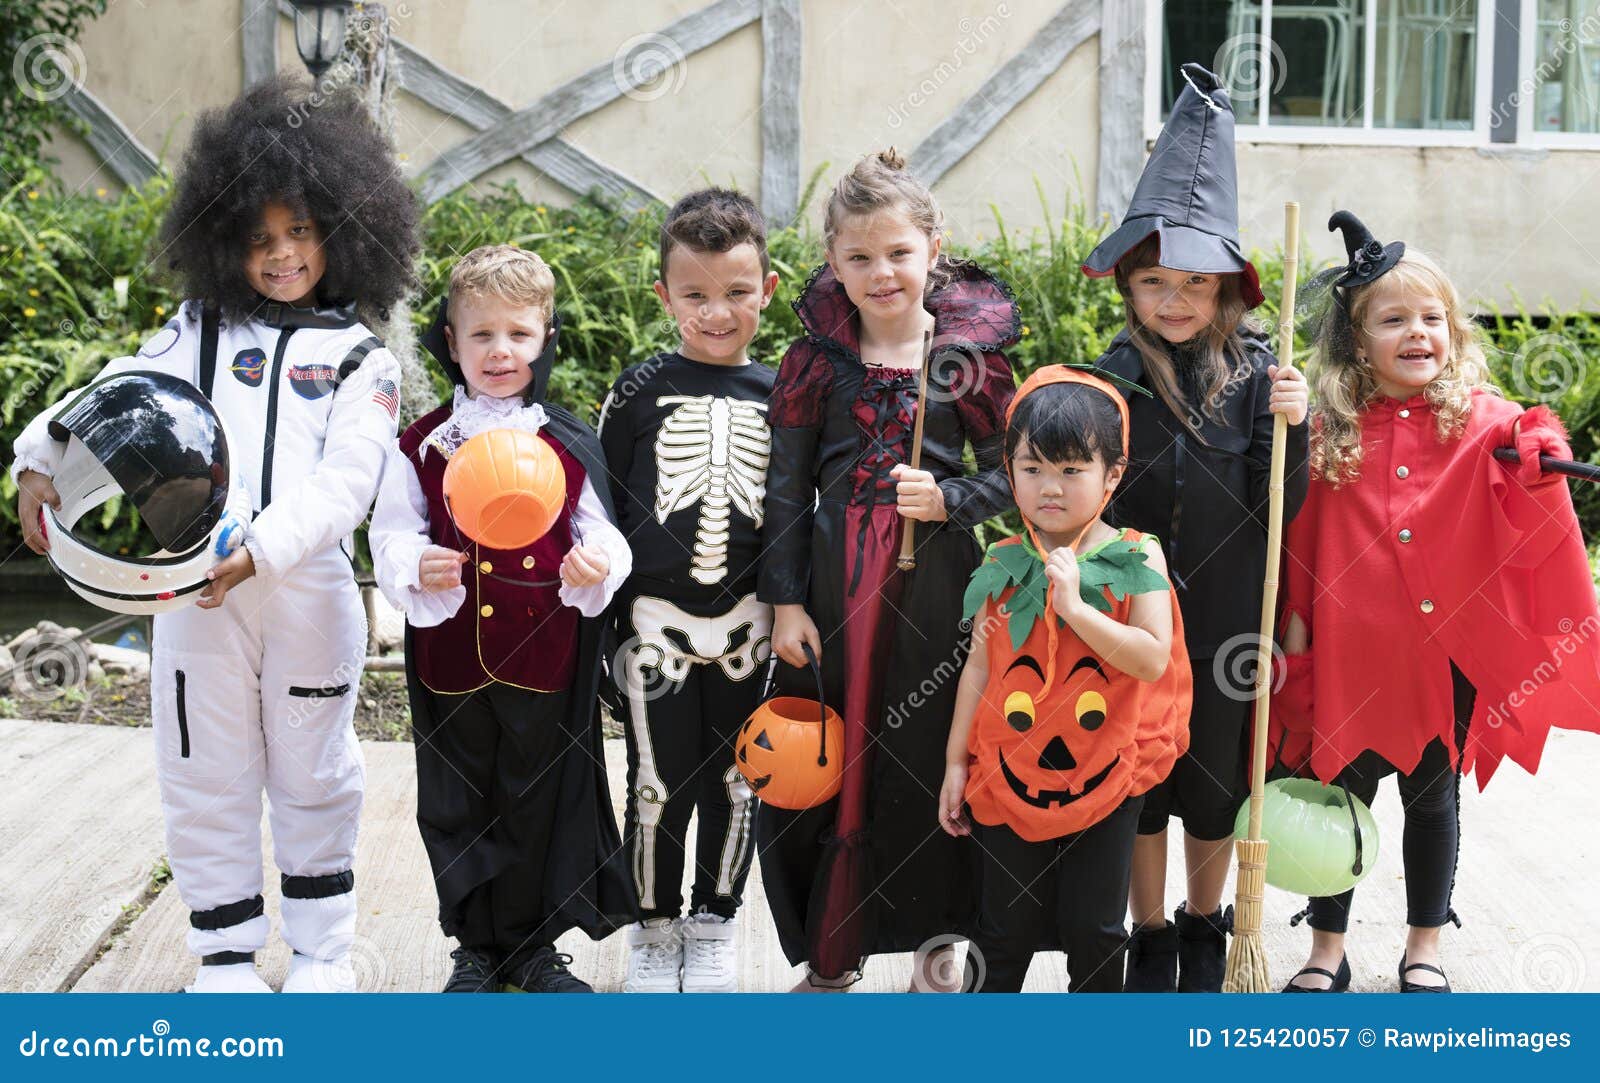 diverse kids in halloween costumes